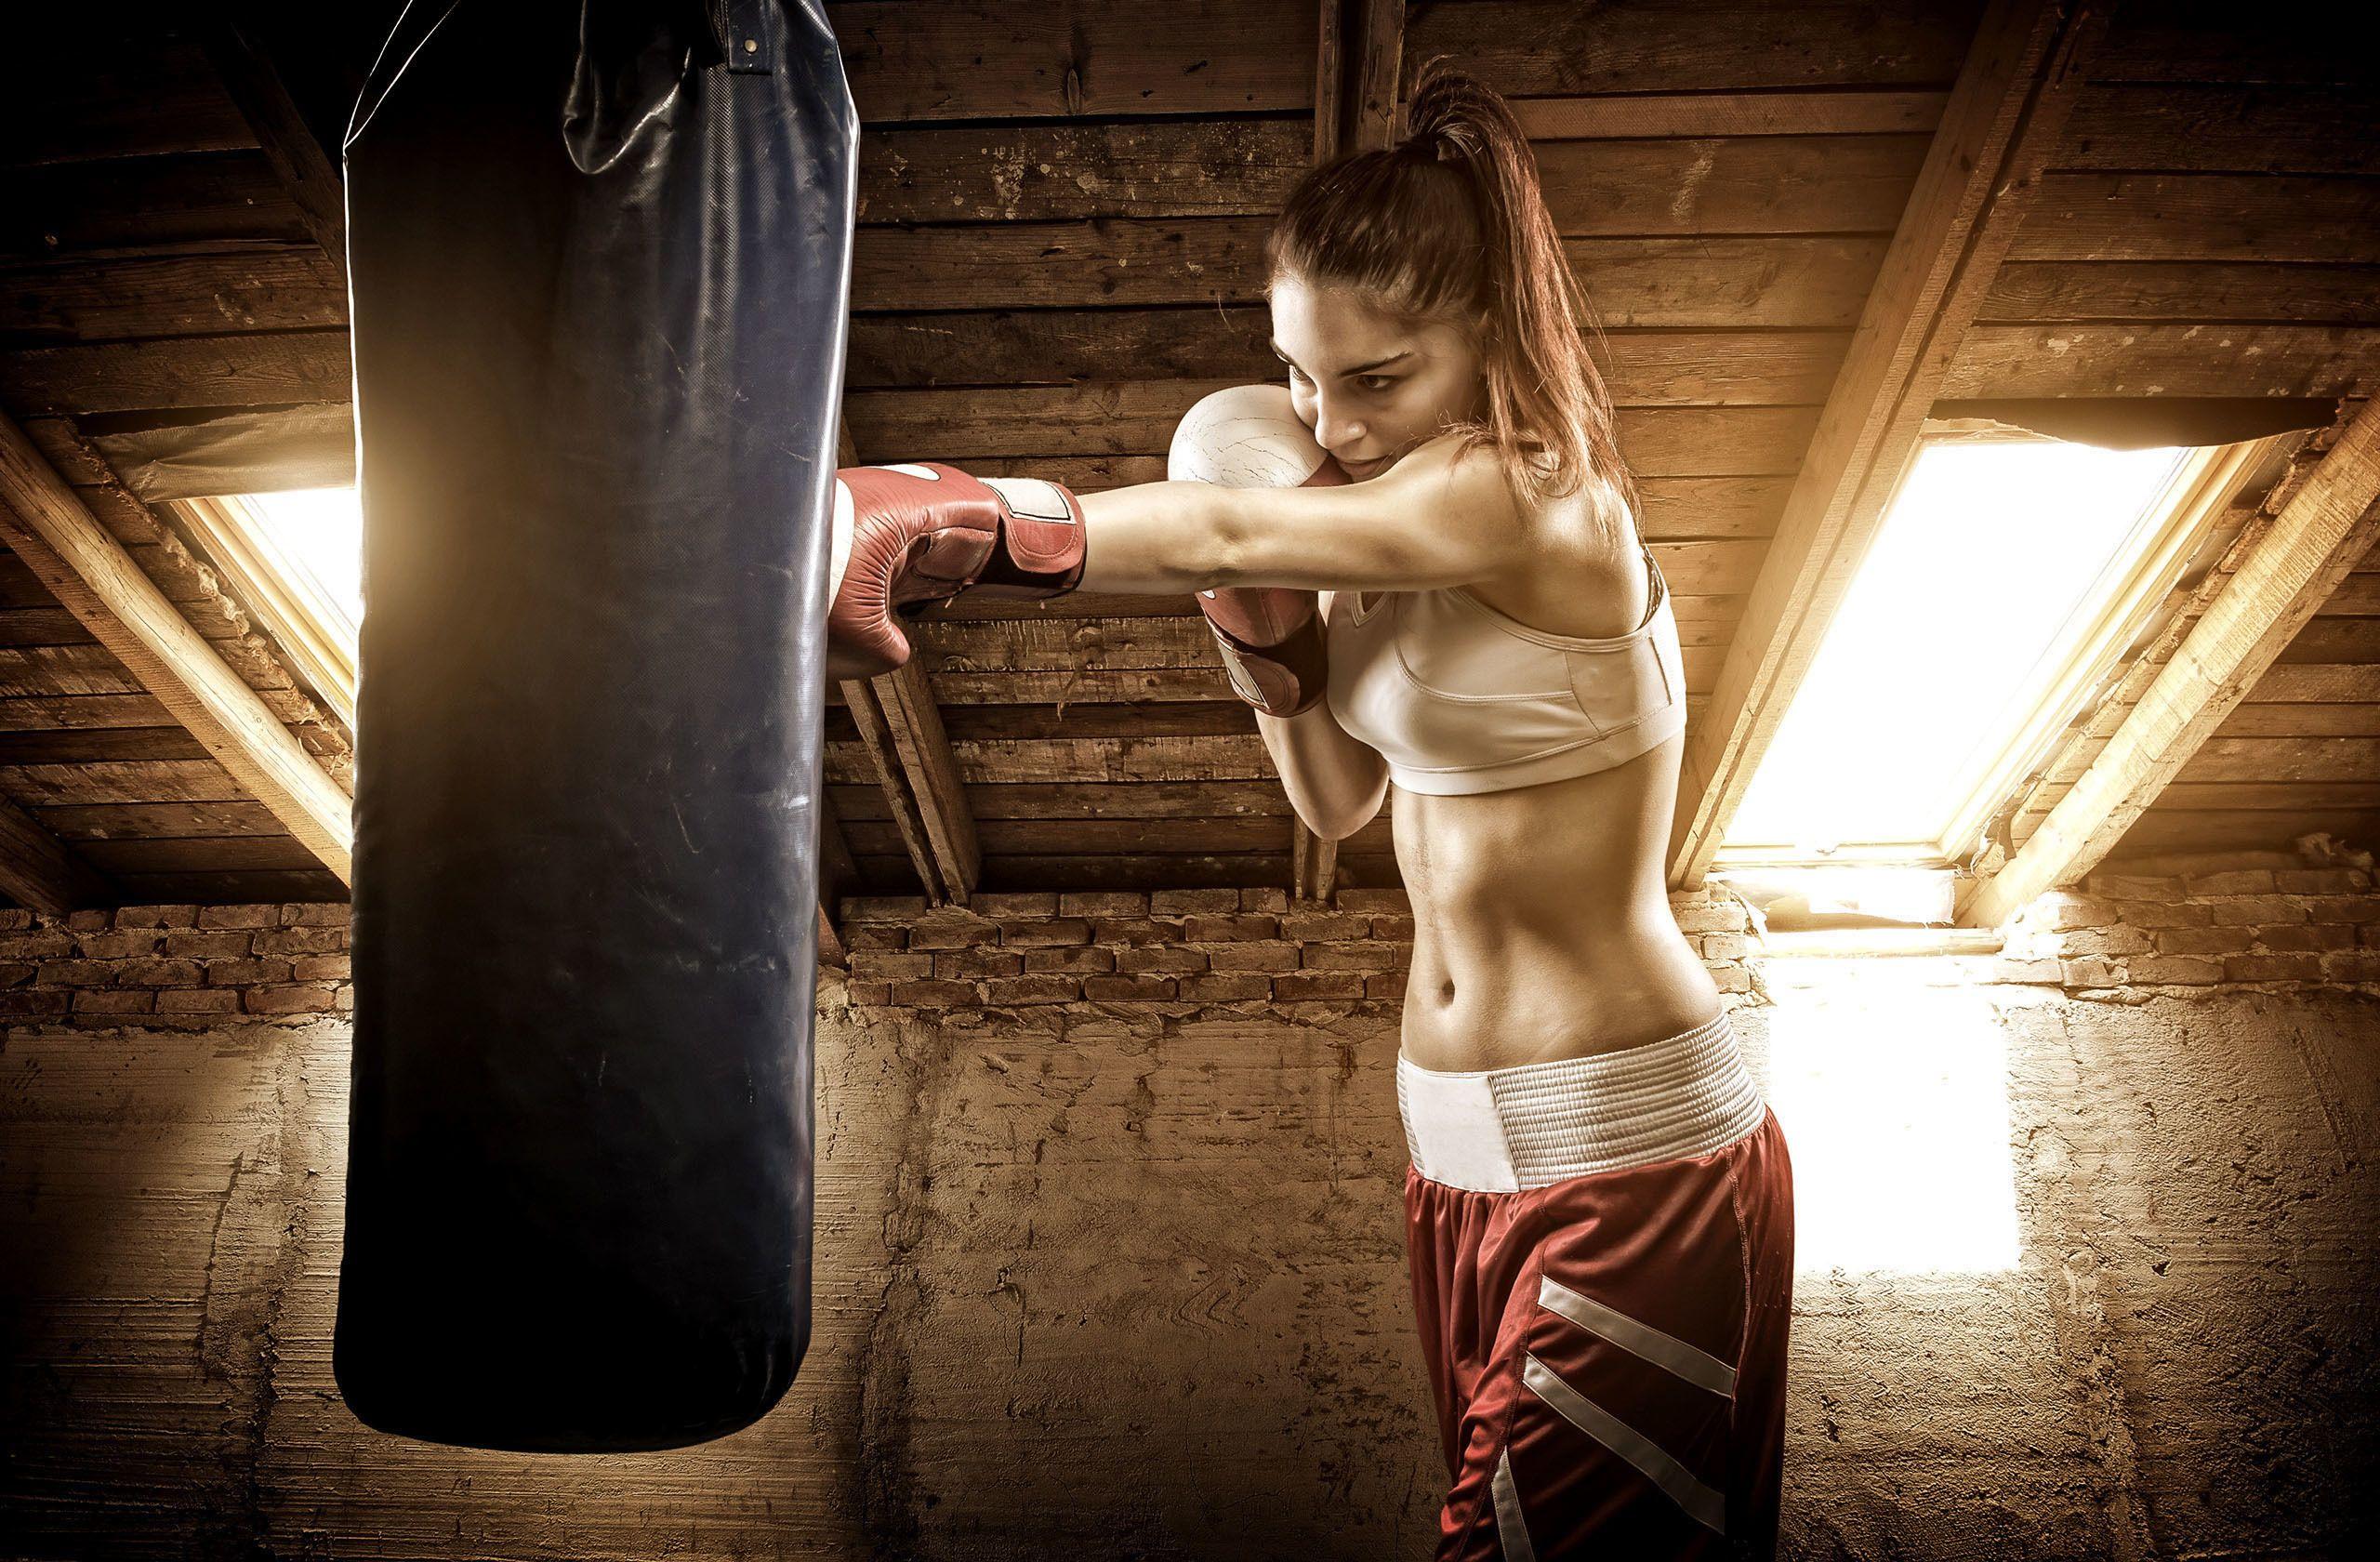 #Workout, #Woman, #Attic, #Boxing. Lifestyle wallpaper